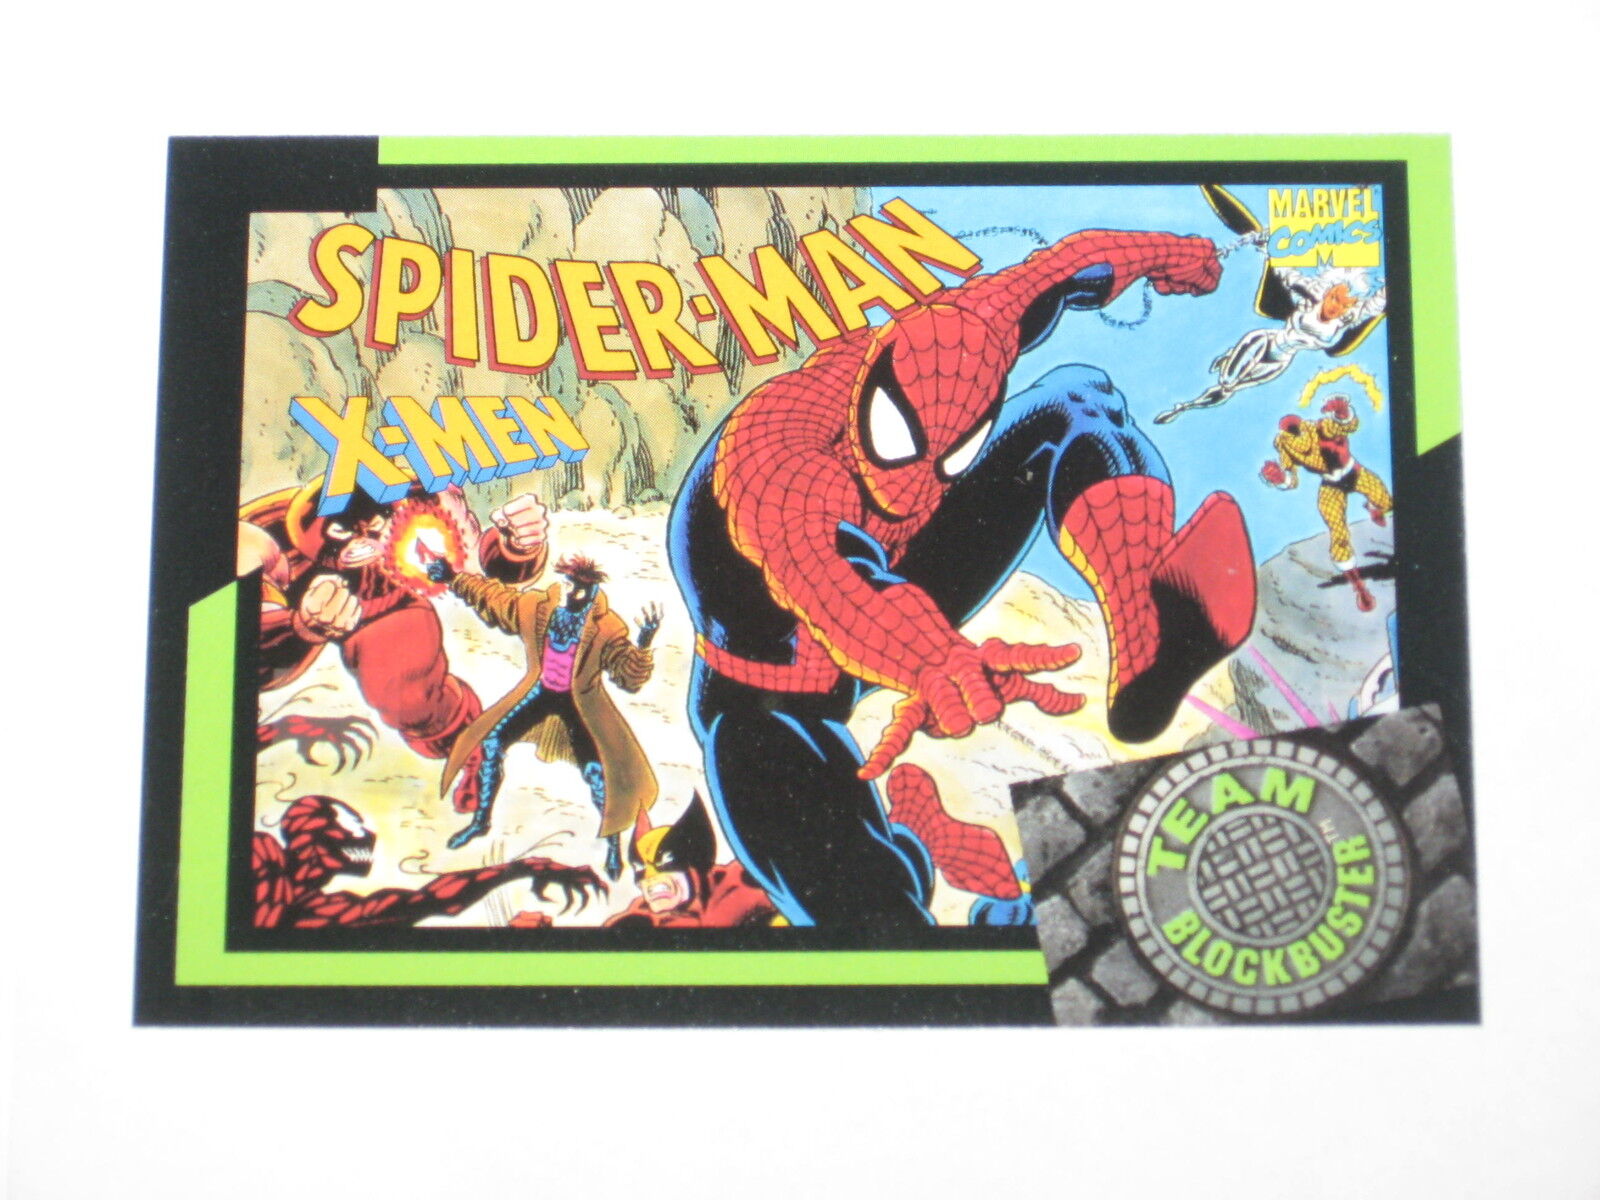 1995 TEAM BLOCKBUSTER VIDEO GAMING CARD SPIDER-MAN X-MEN PROMO # 45 ARCADES